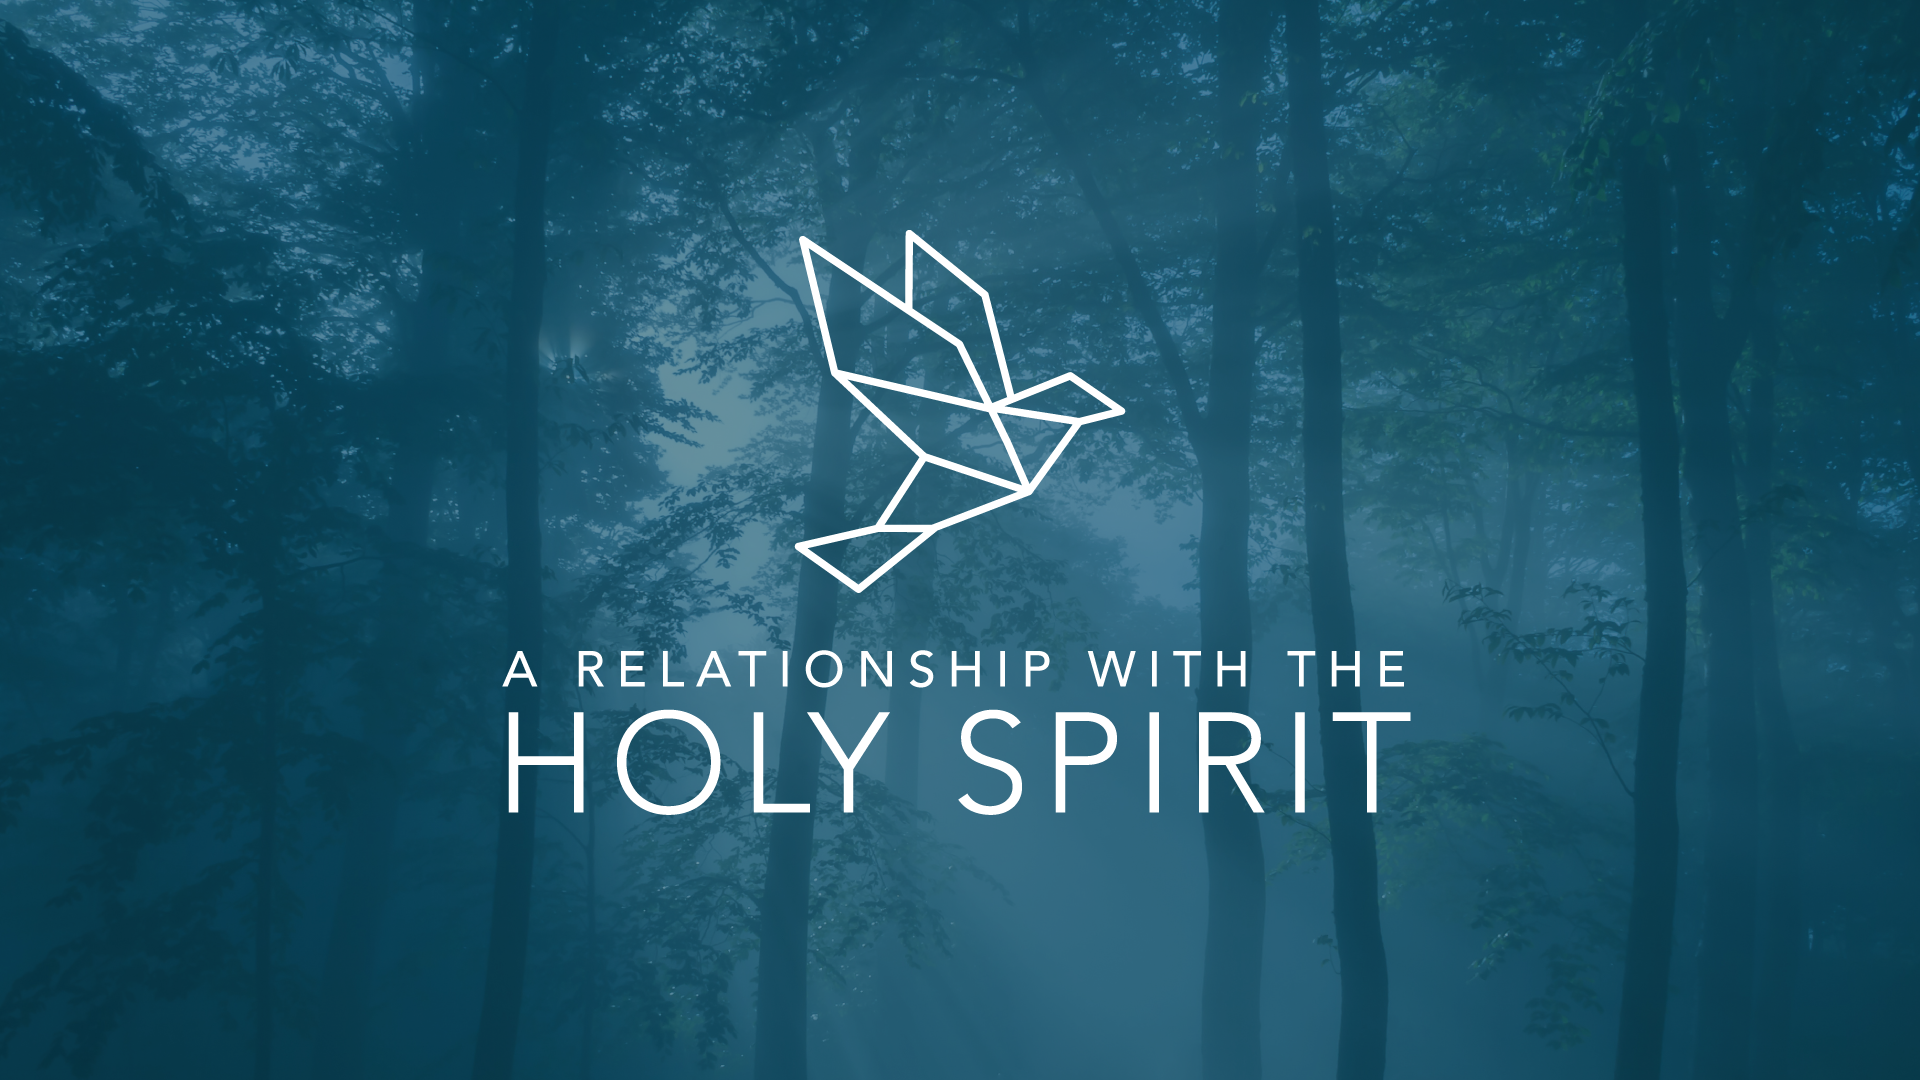 Holyspirit-hd - Relationship With The Holy Spirit - HD Wallpaper 